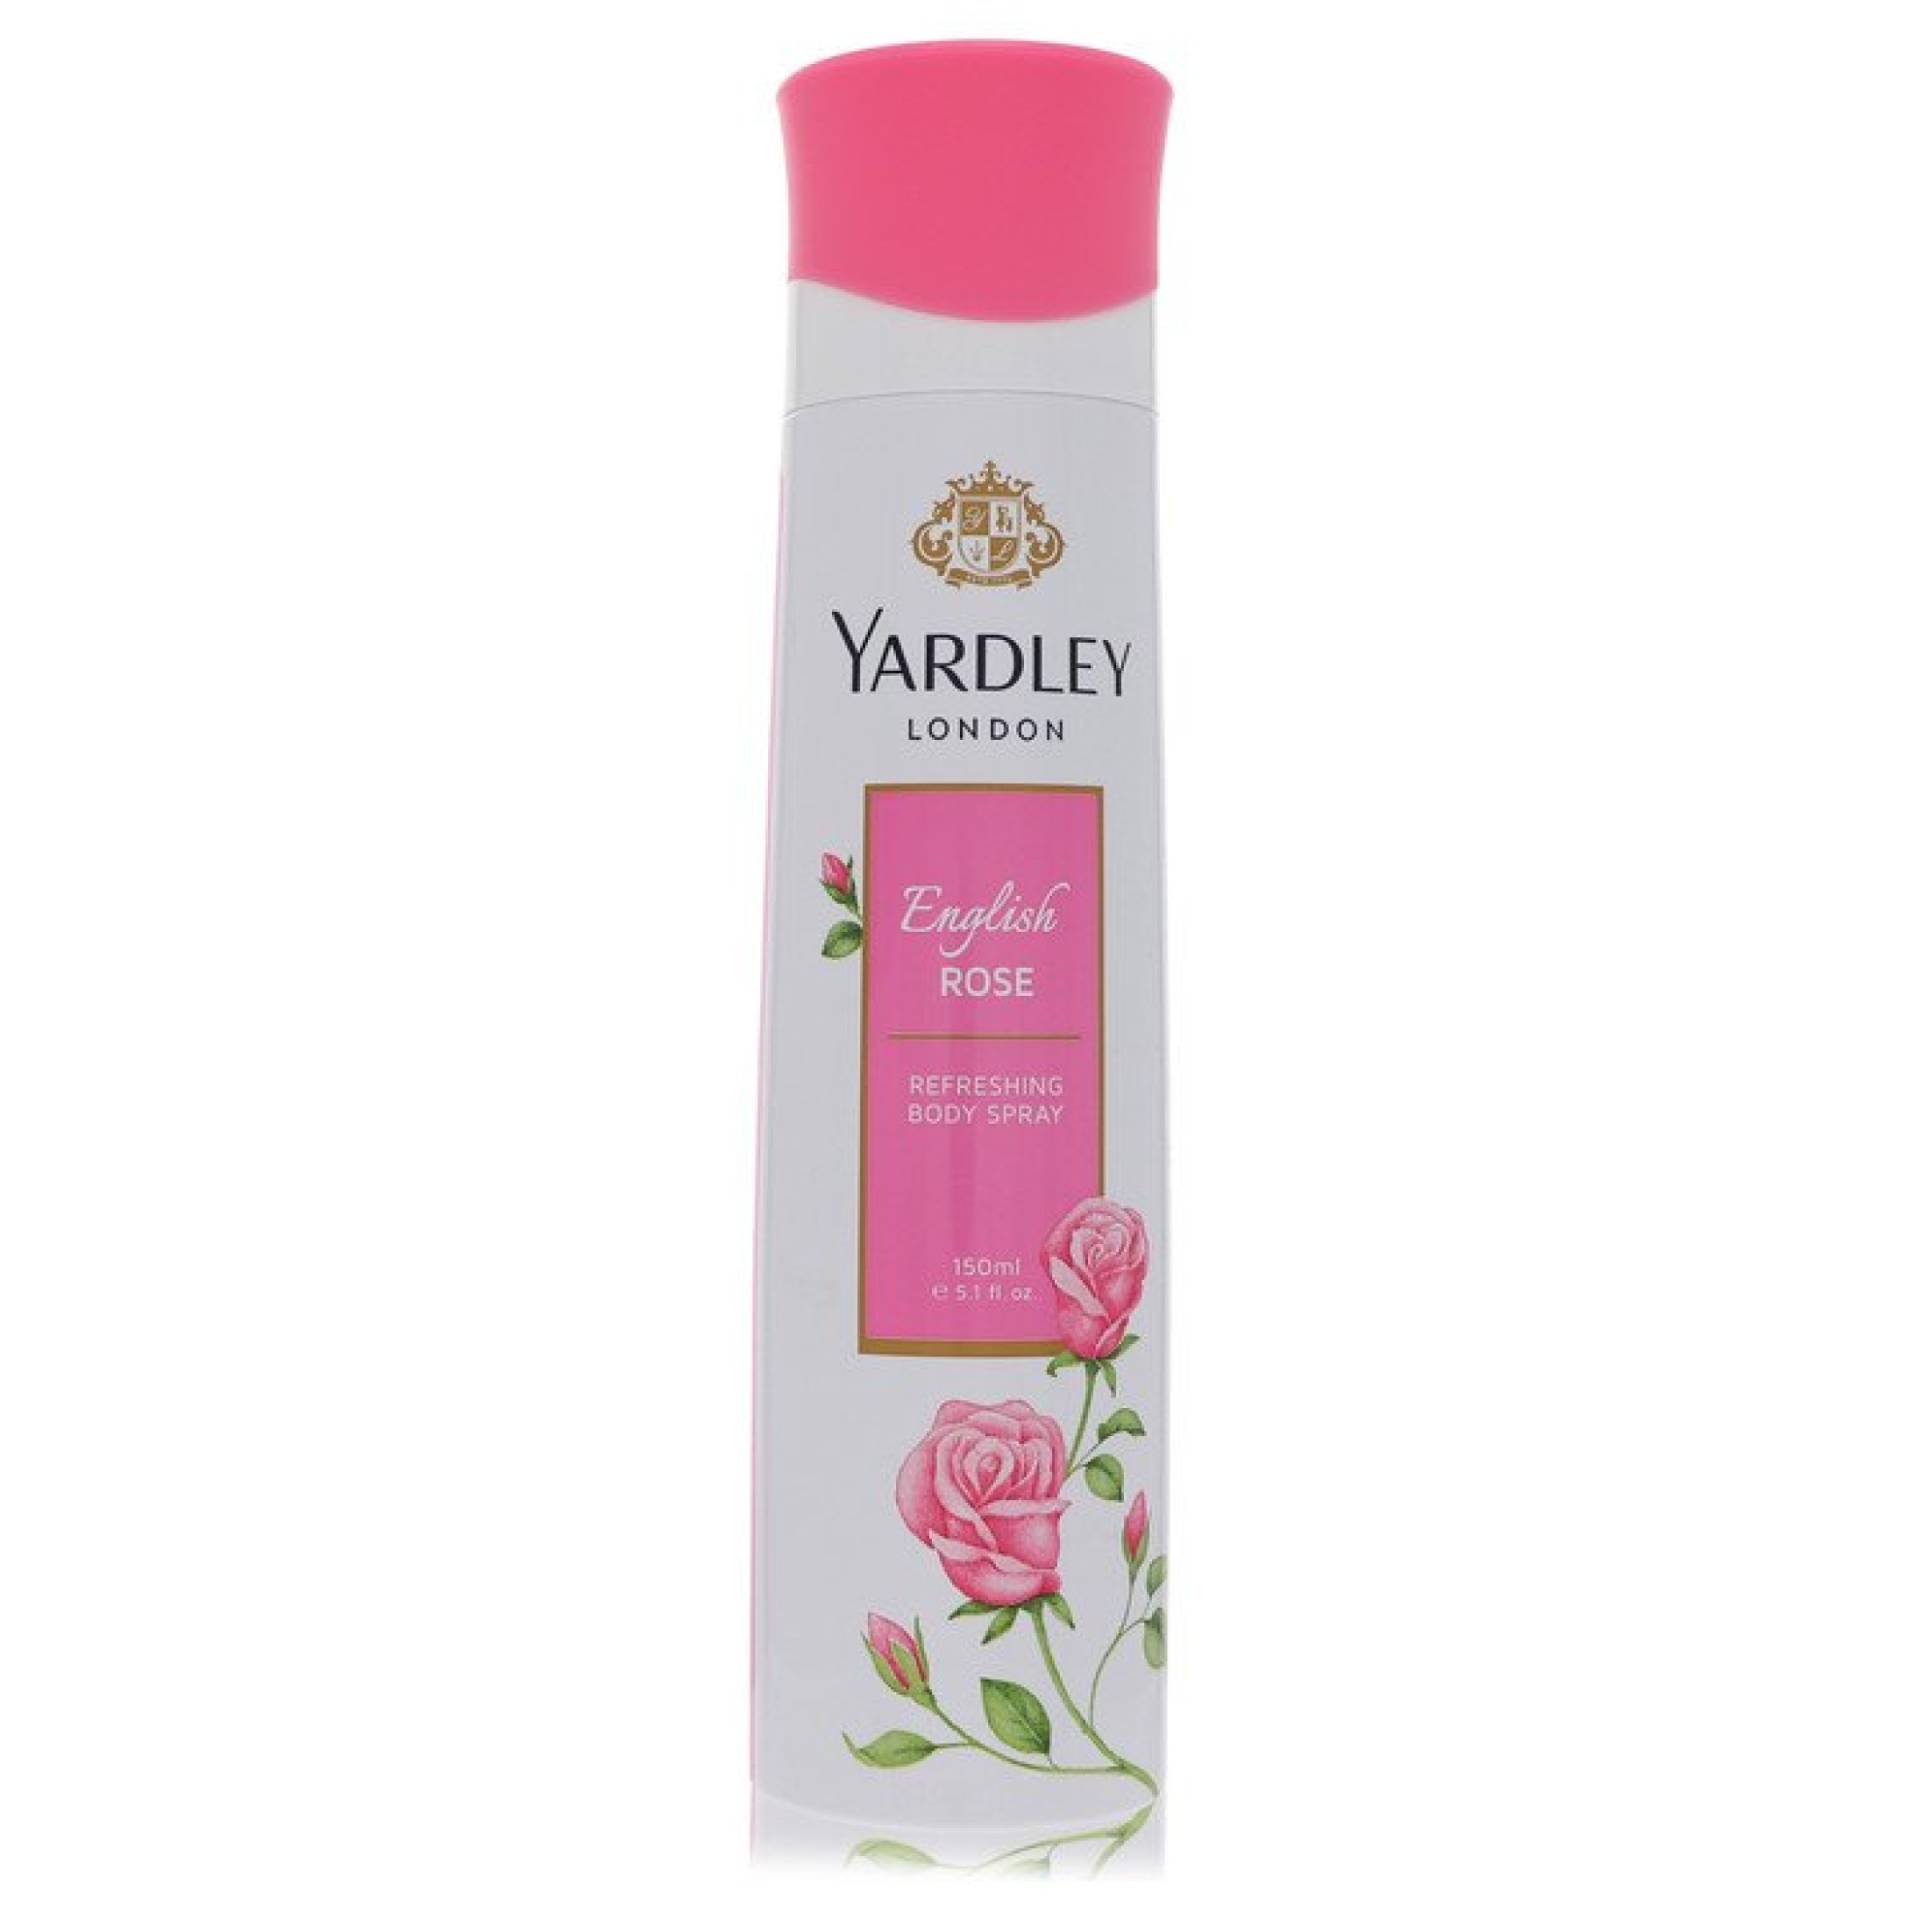 Yardley London English Rose Yardley Body Spray 151 ml von Yardley London